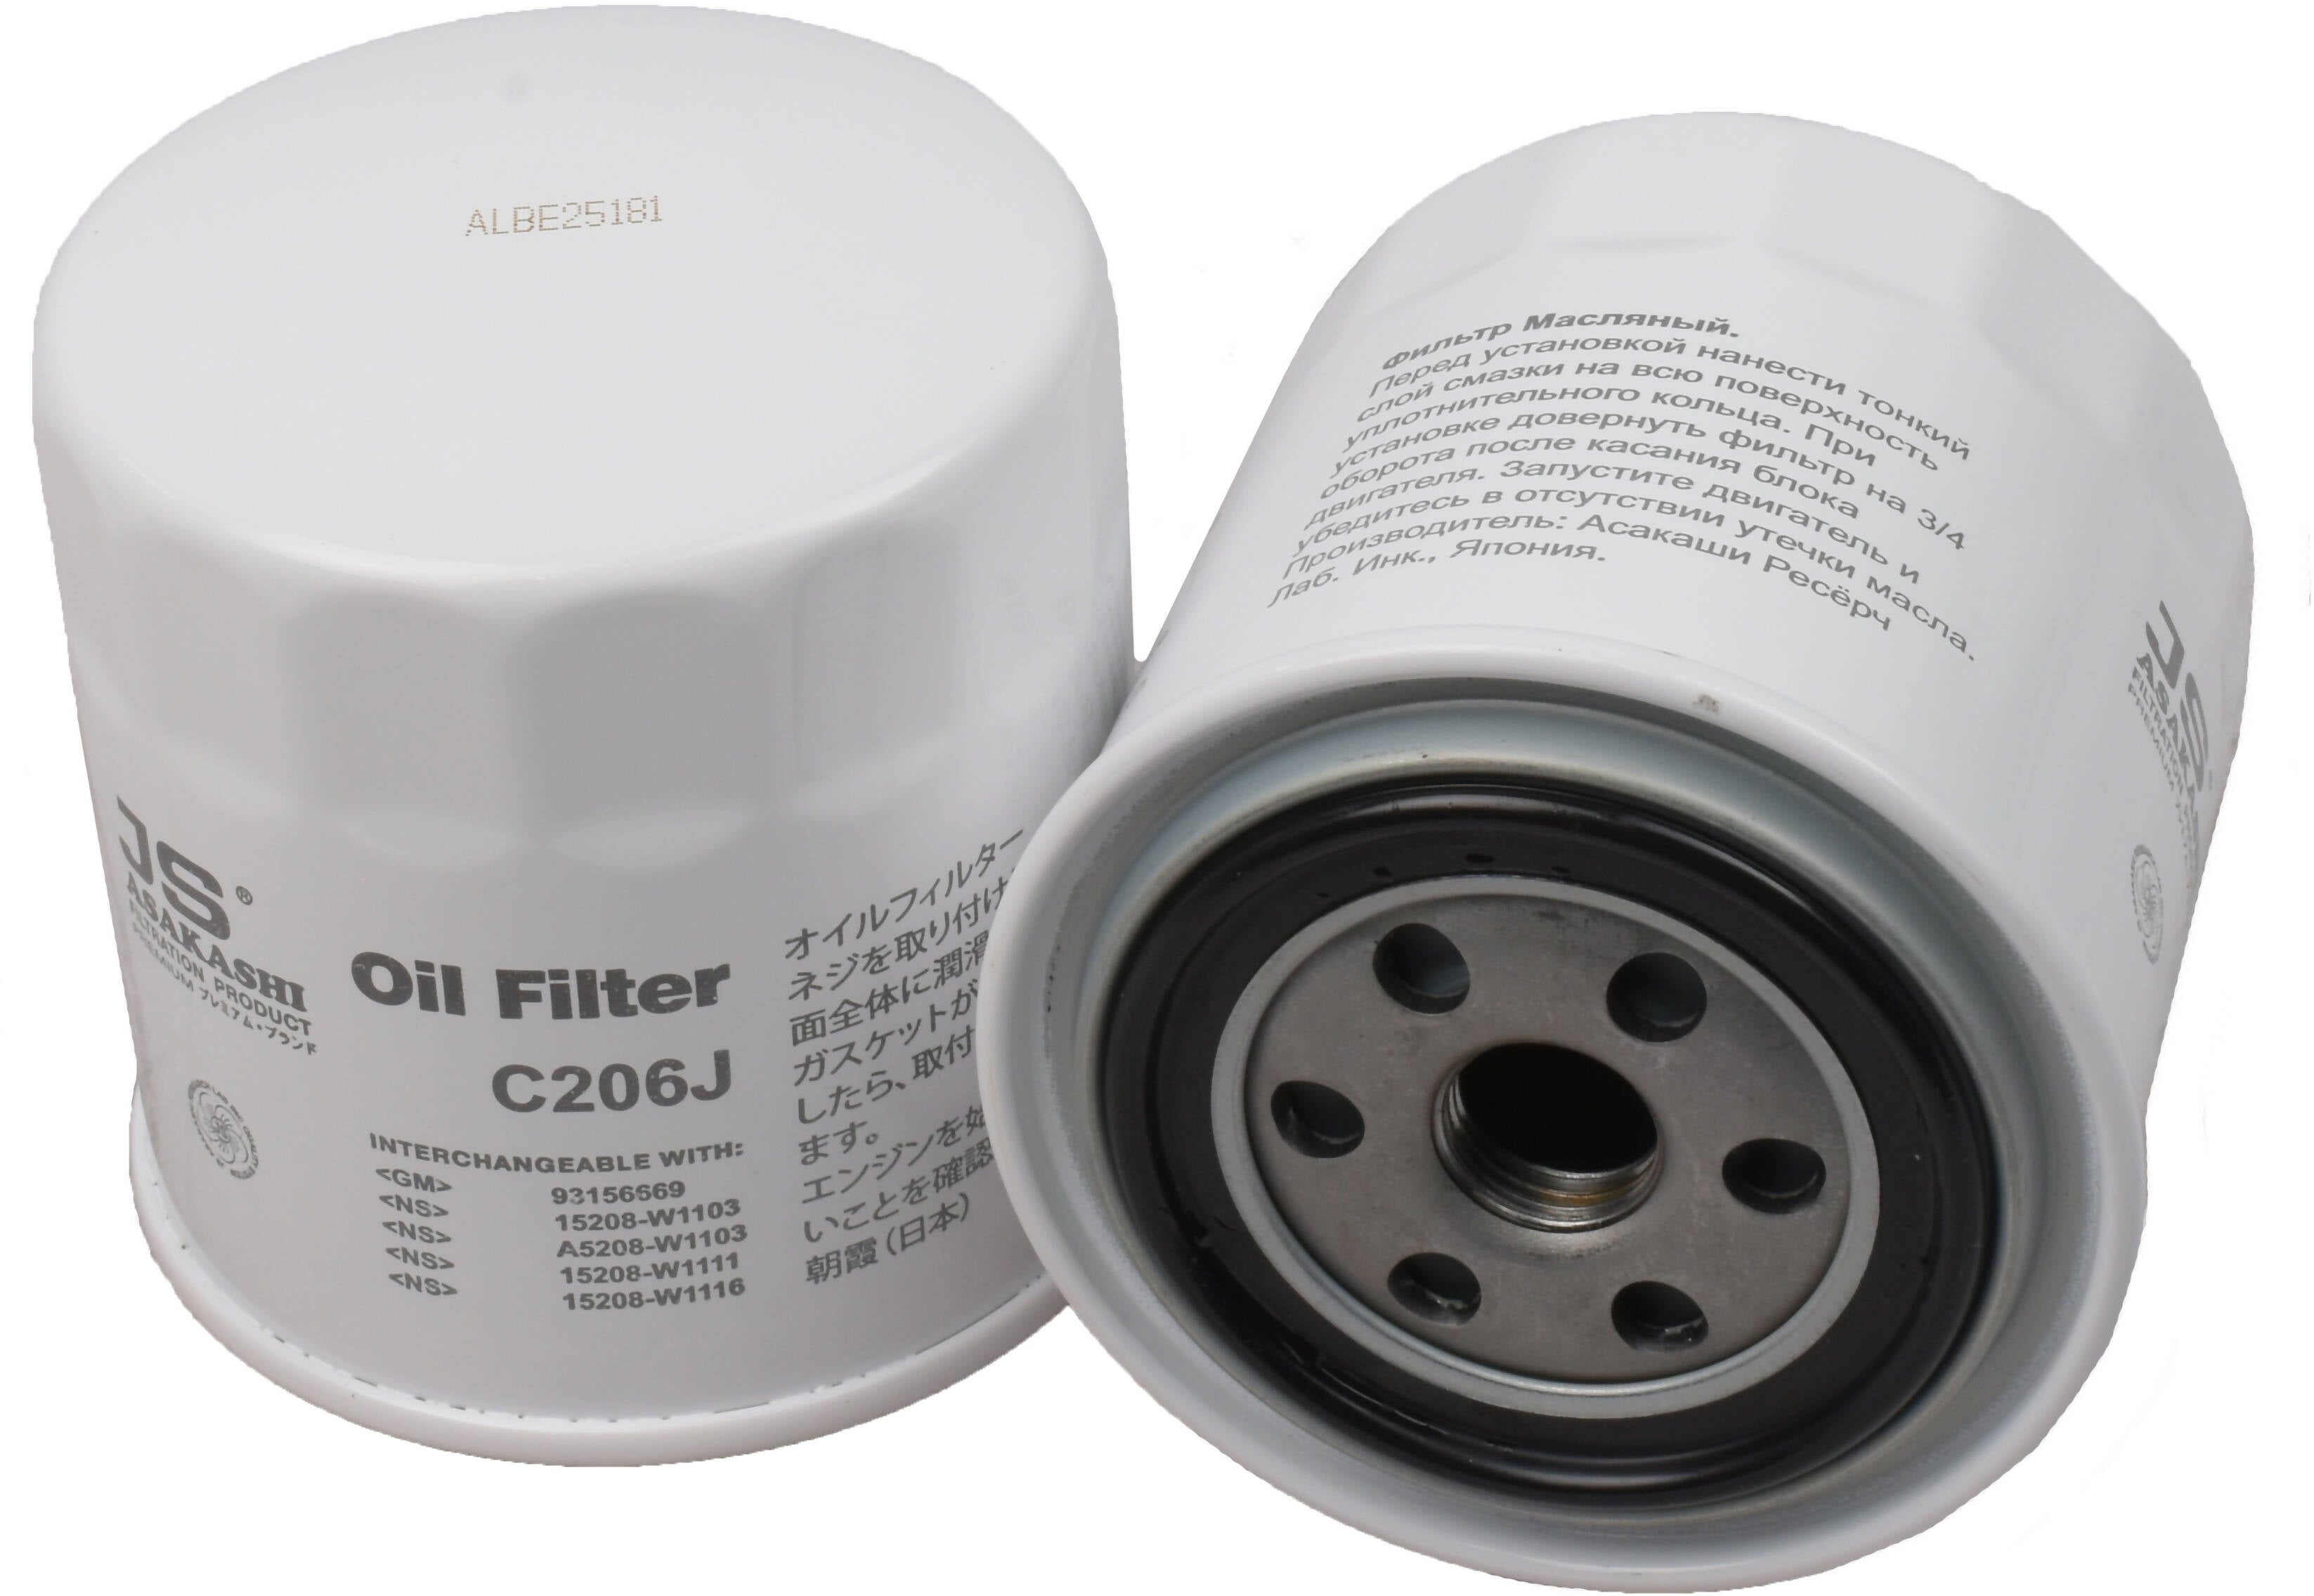 Oil Filter, JS, 15208-W1116, C206J (001313)